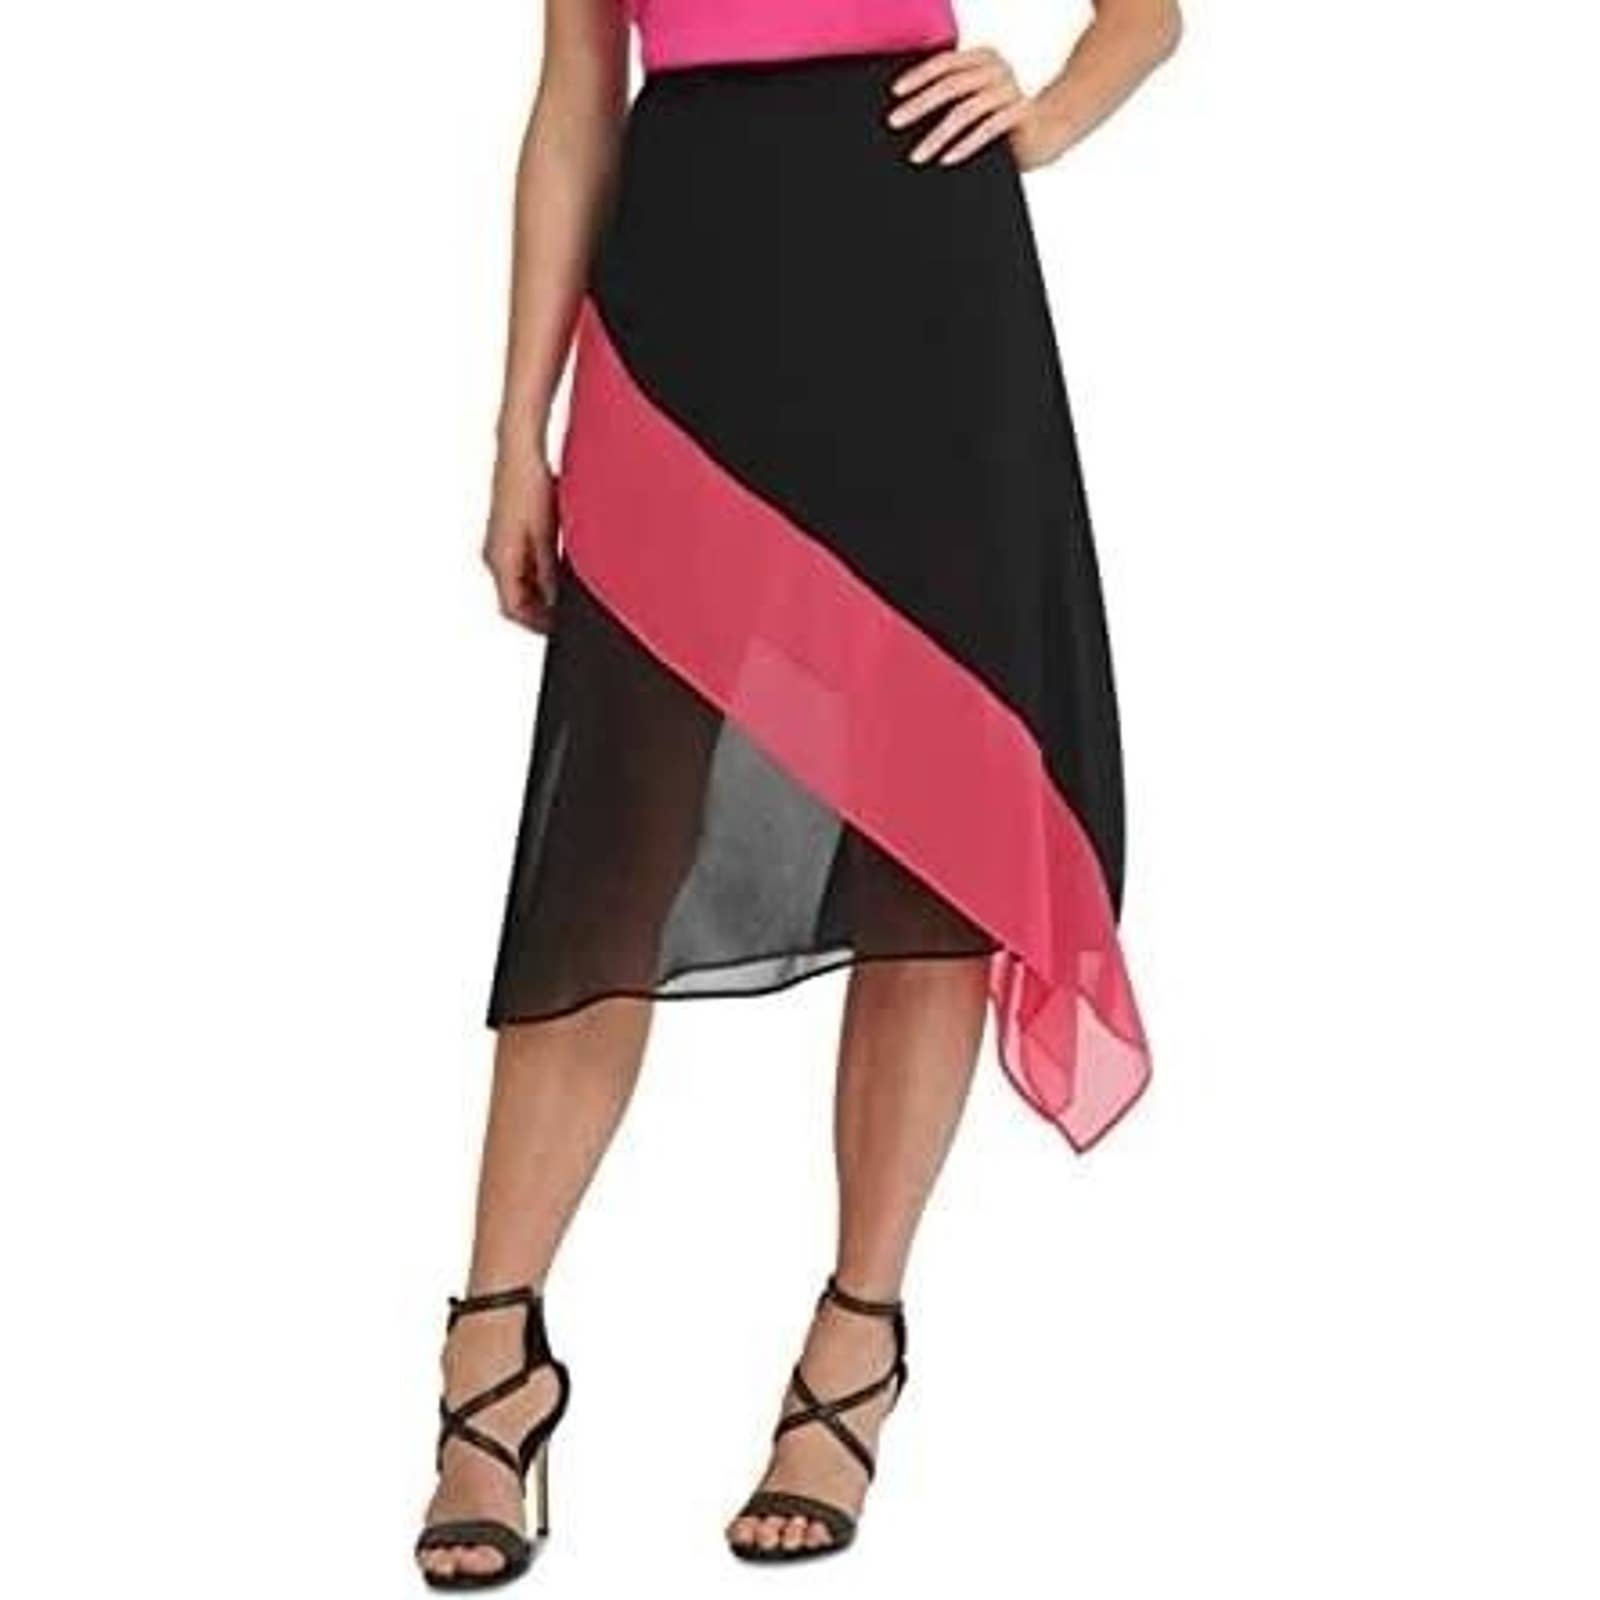 reasonable price DKNY Black Pink Color Block Asymmetrical Midi Skirt Women´s Size Extra Large XL ikzLDlDrZ US Outlet